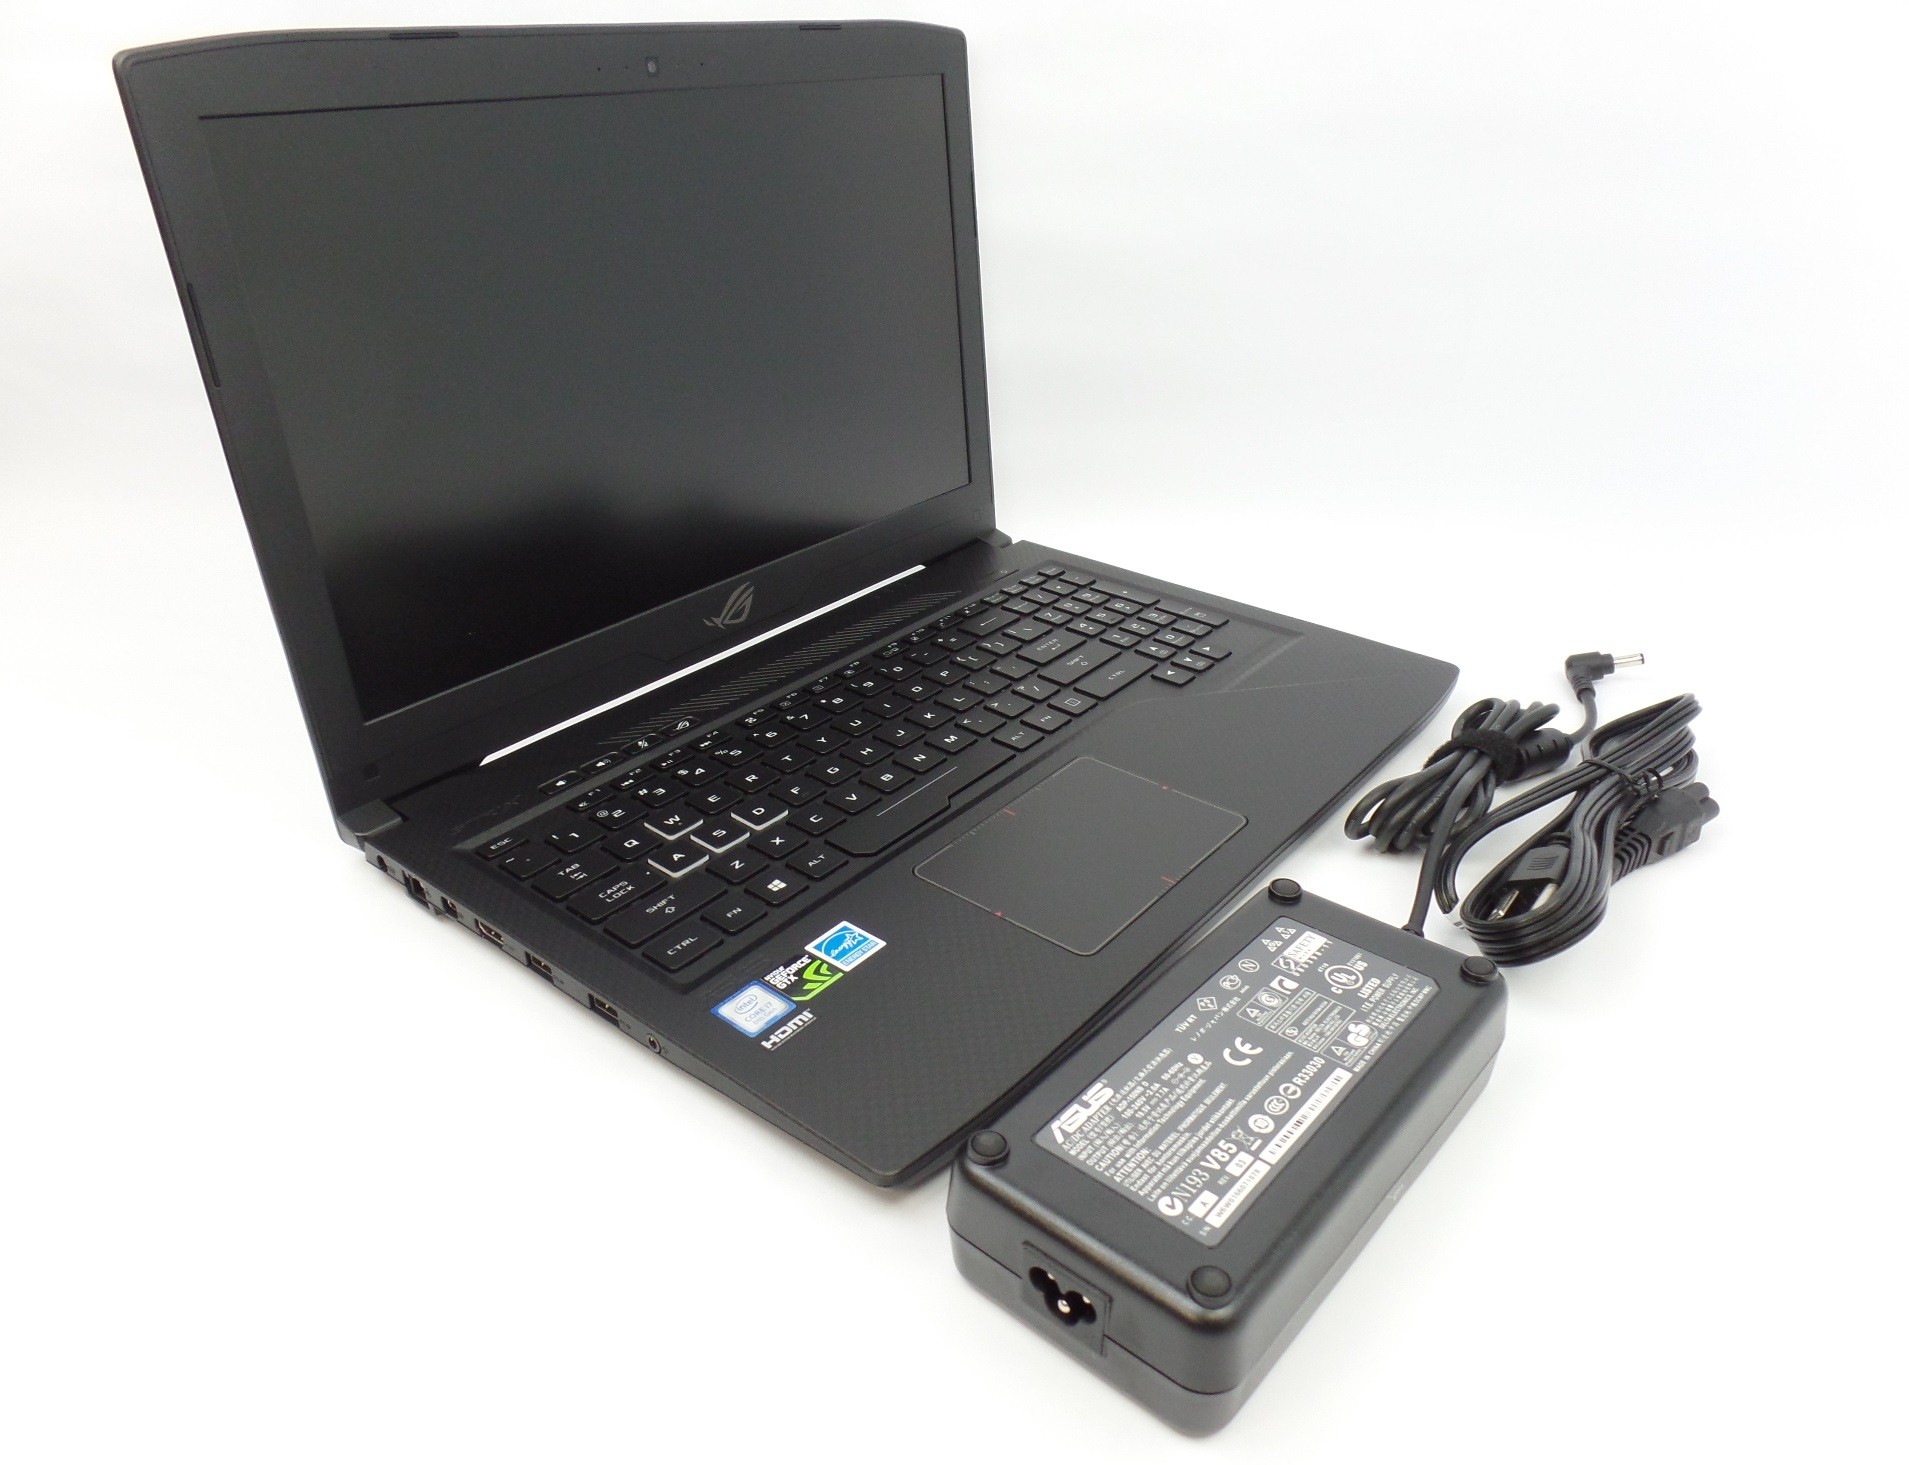 Asus ROG Strix GL503GE-RS71 15.6" FHD i7-8750H 16GB 1TB GTX 1050Ti W10H Laptop S